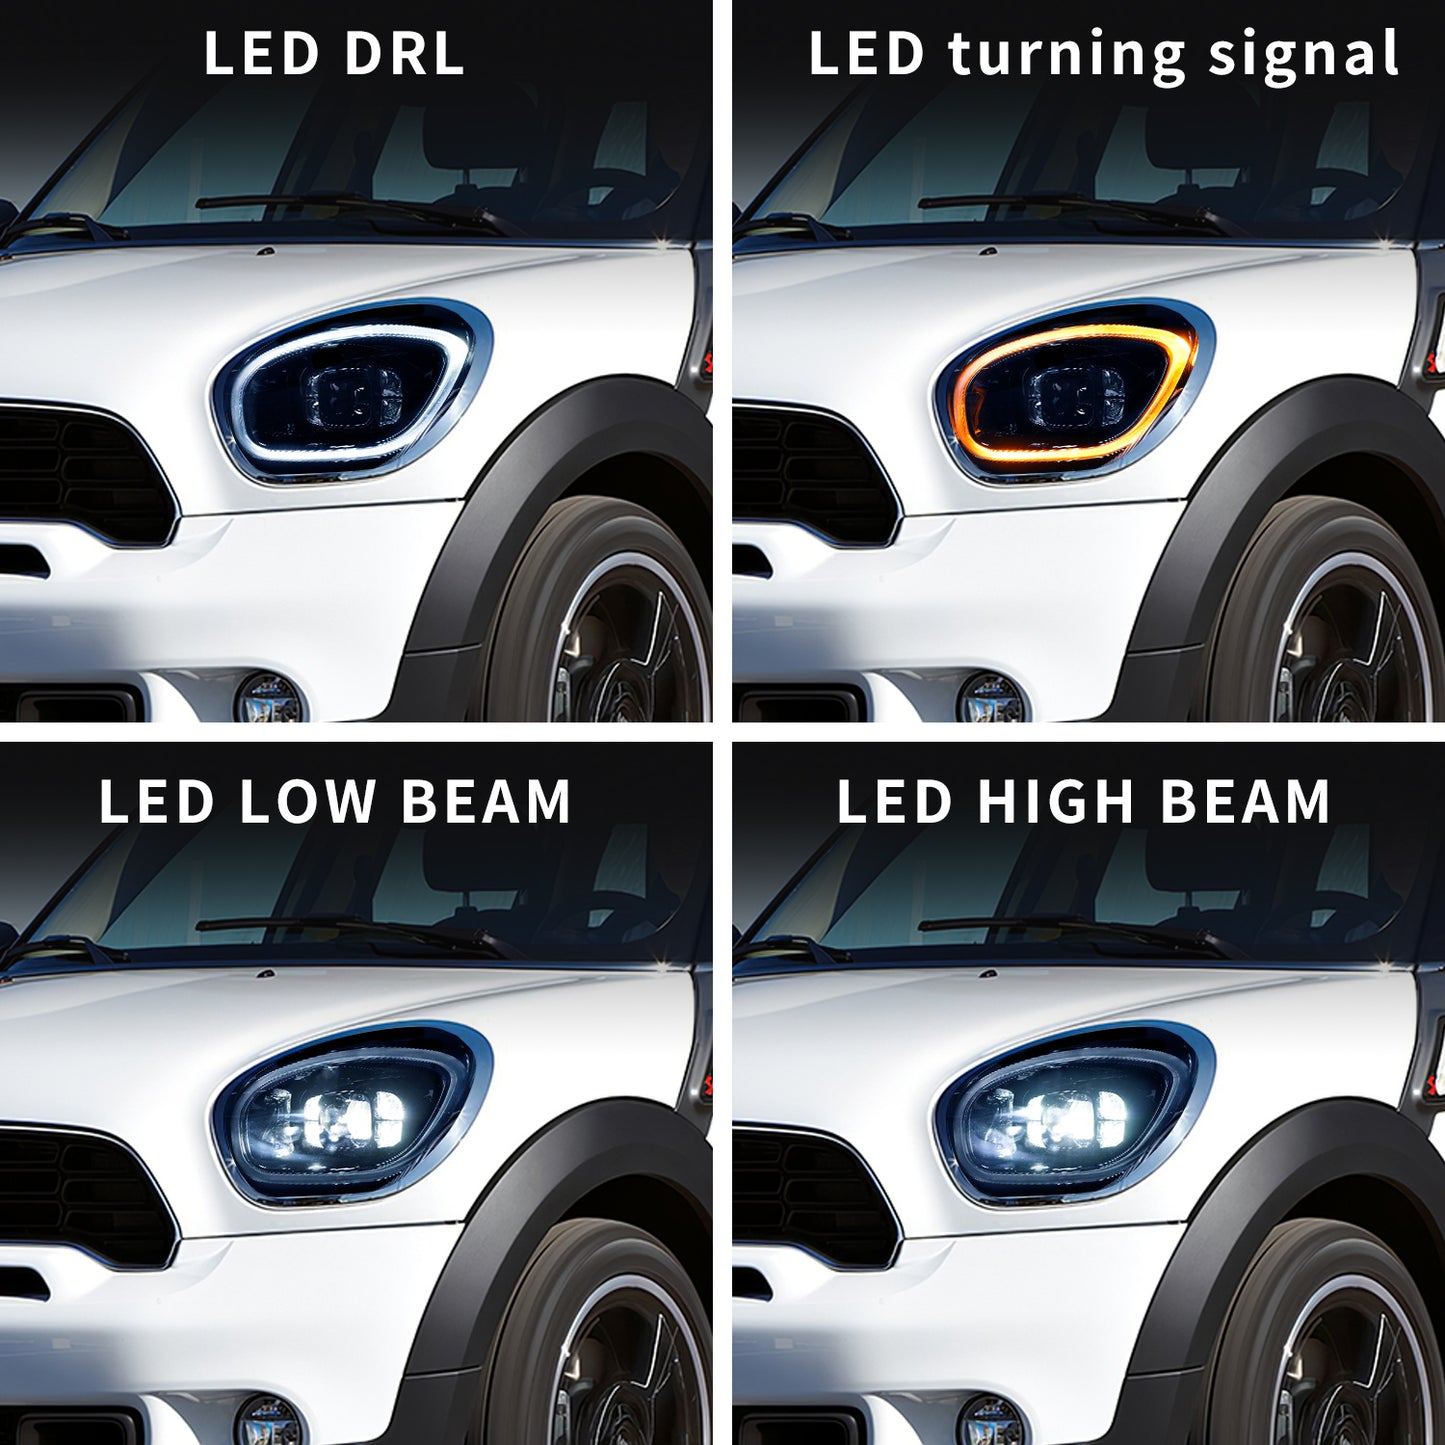 Full LED Headlights Assembly For Mini R60 2010-2016